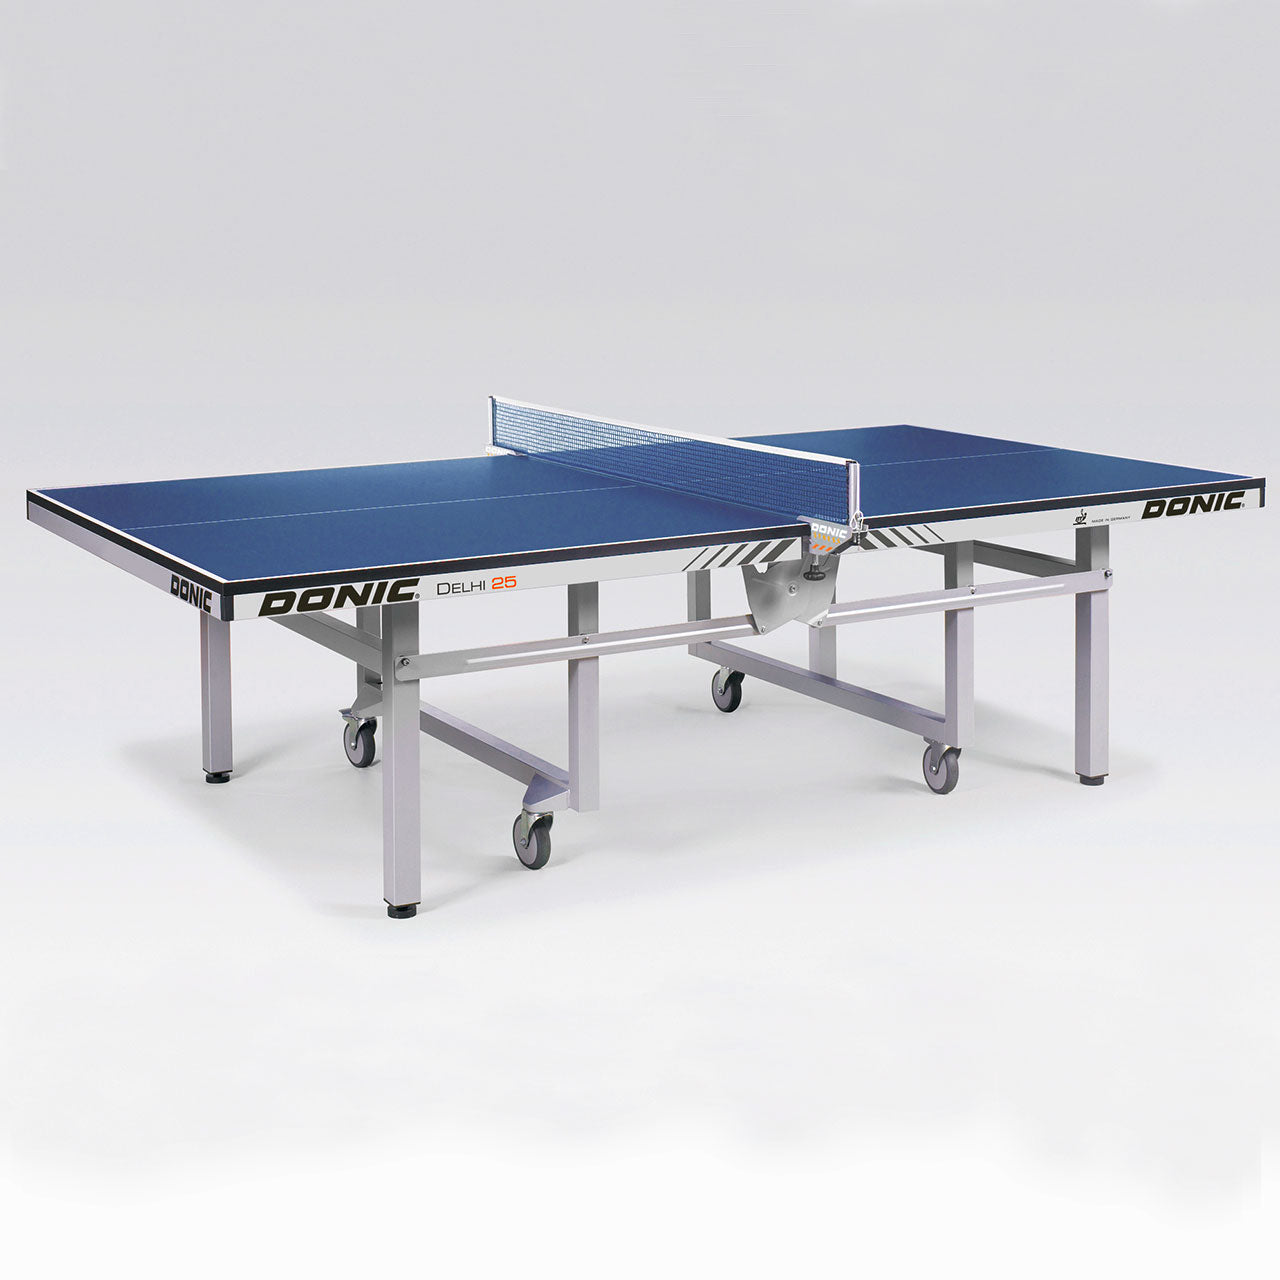 Donic Delhi 25 Table Tennis Table